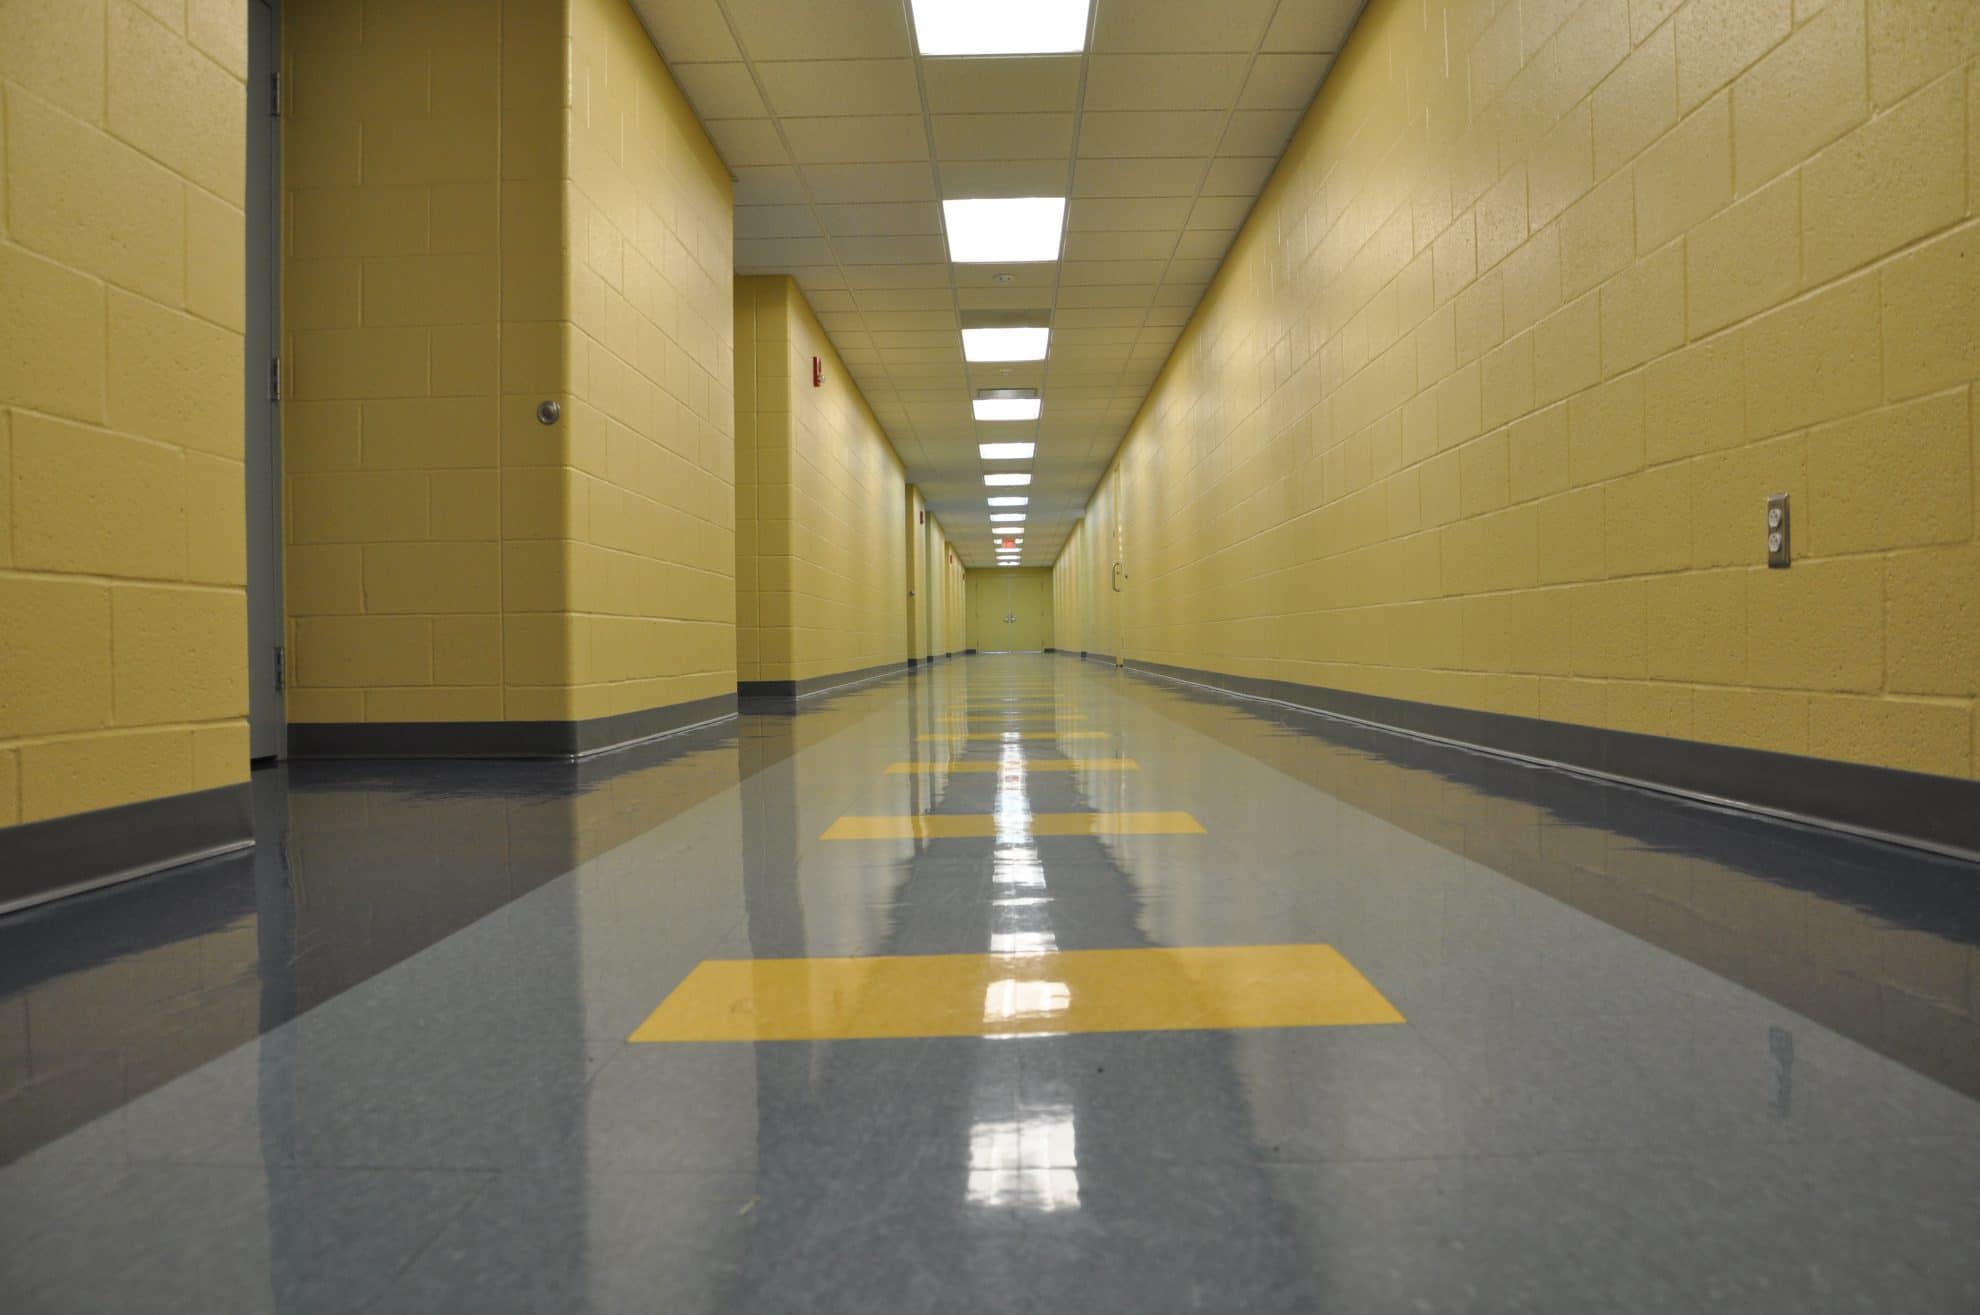 Yellow hallway